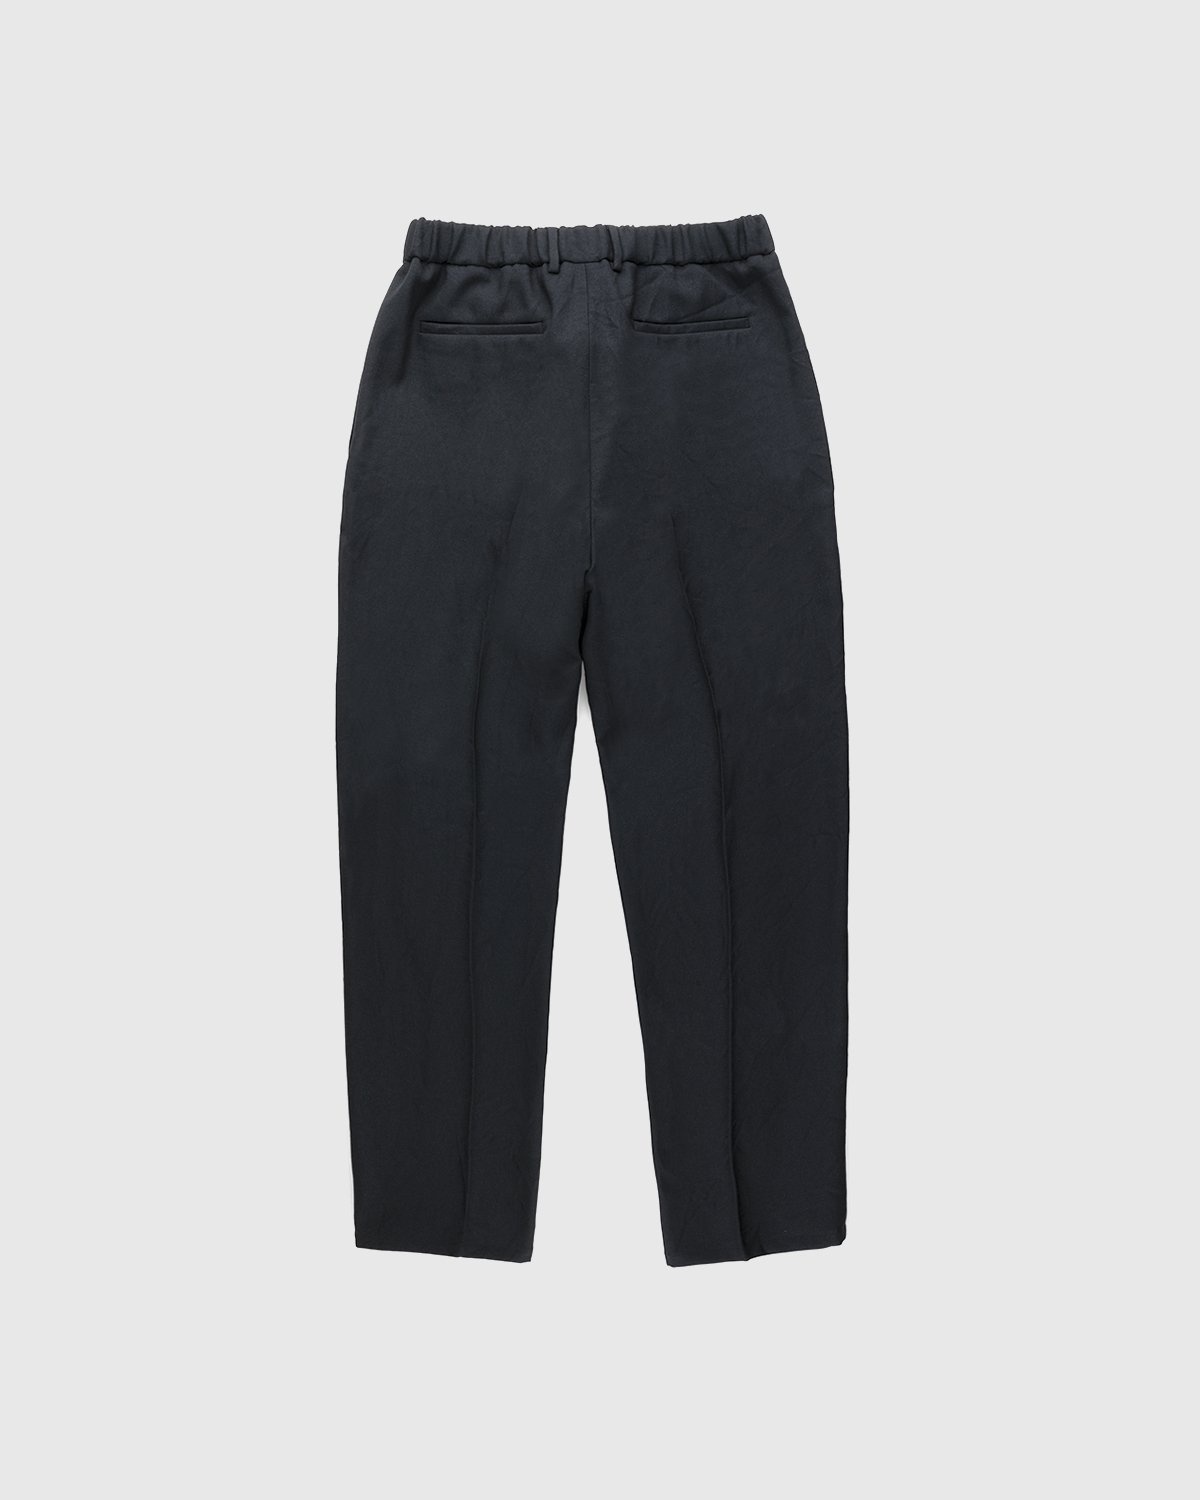 Jil Sander – Trousers Black - Pants - Black - Image 2